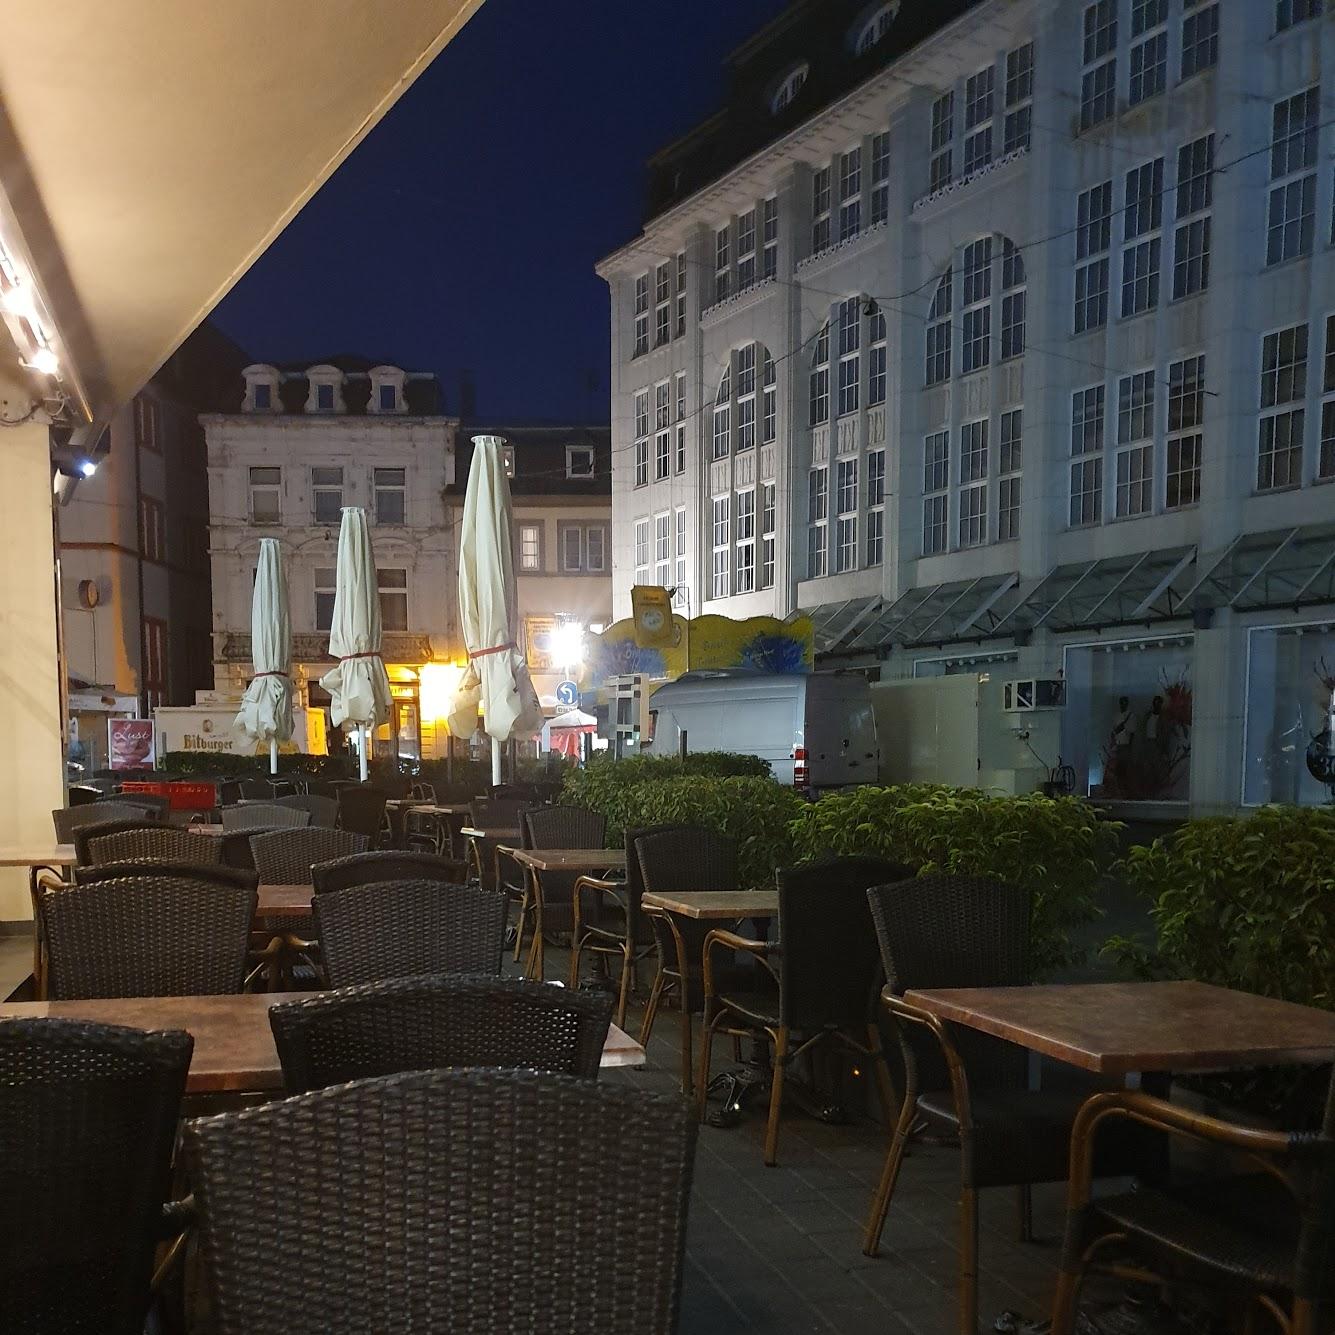 Restaurant "Schlemmereule" in  Trier